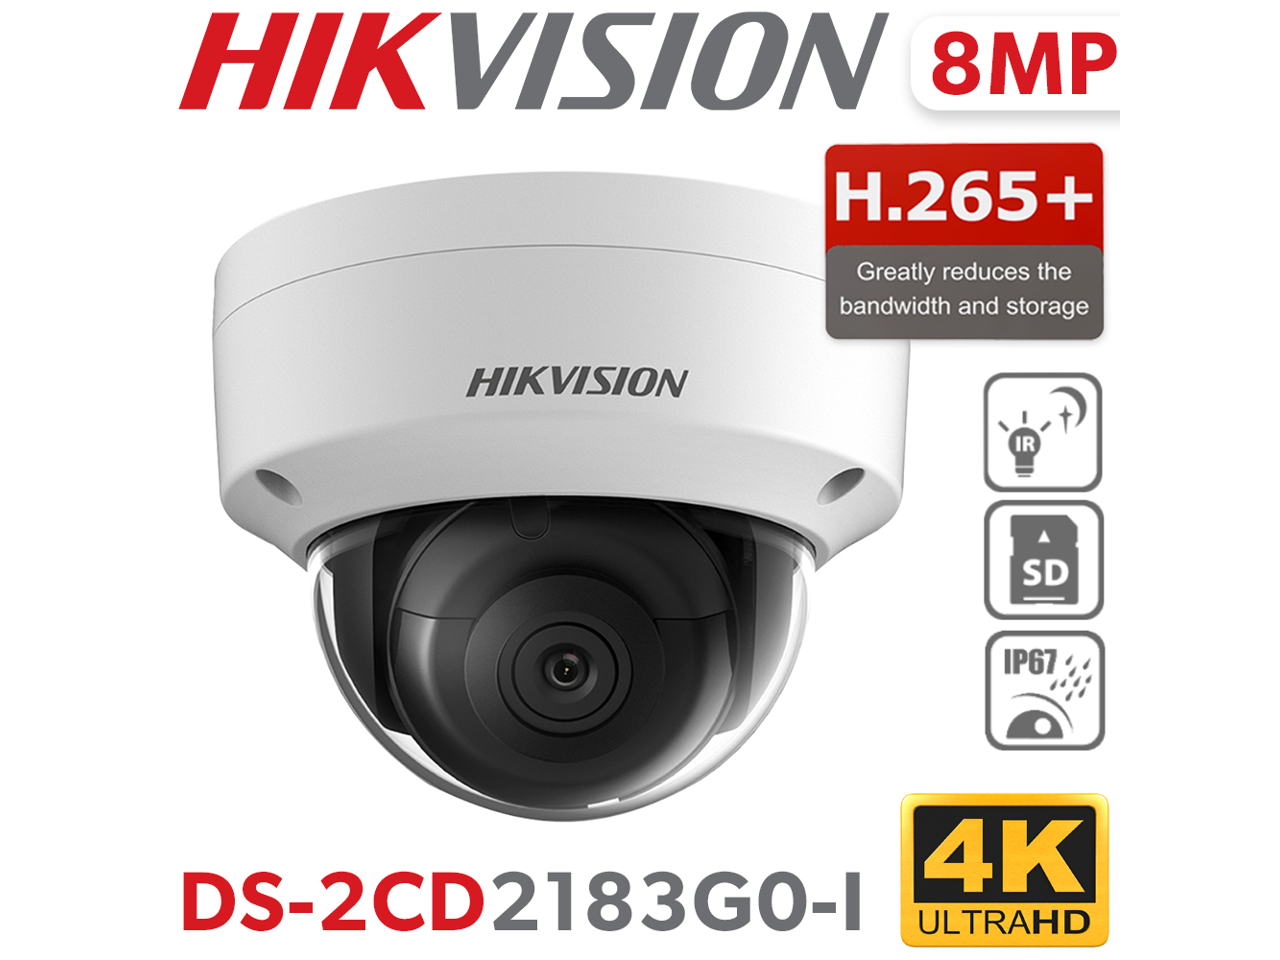 hikvision 8mp camera